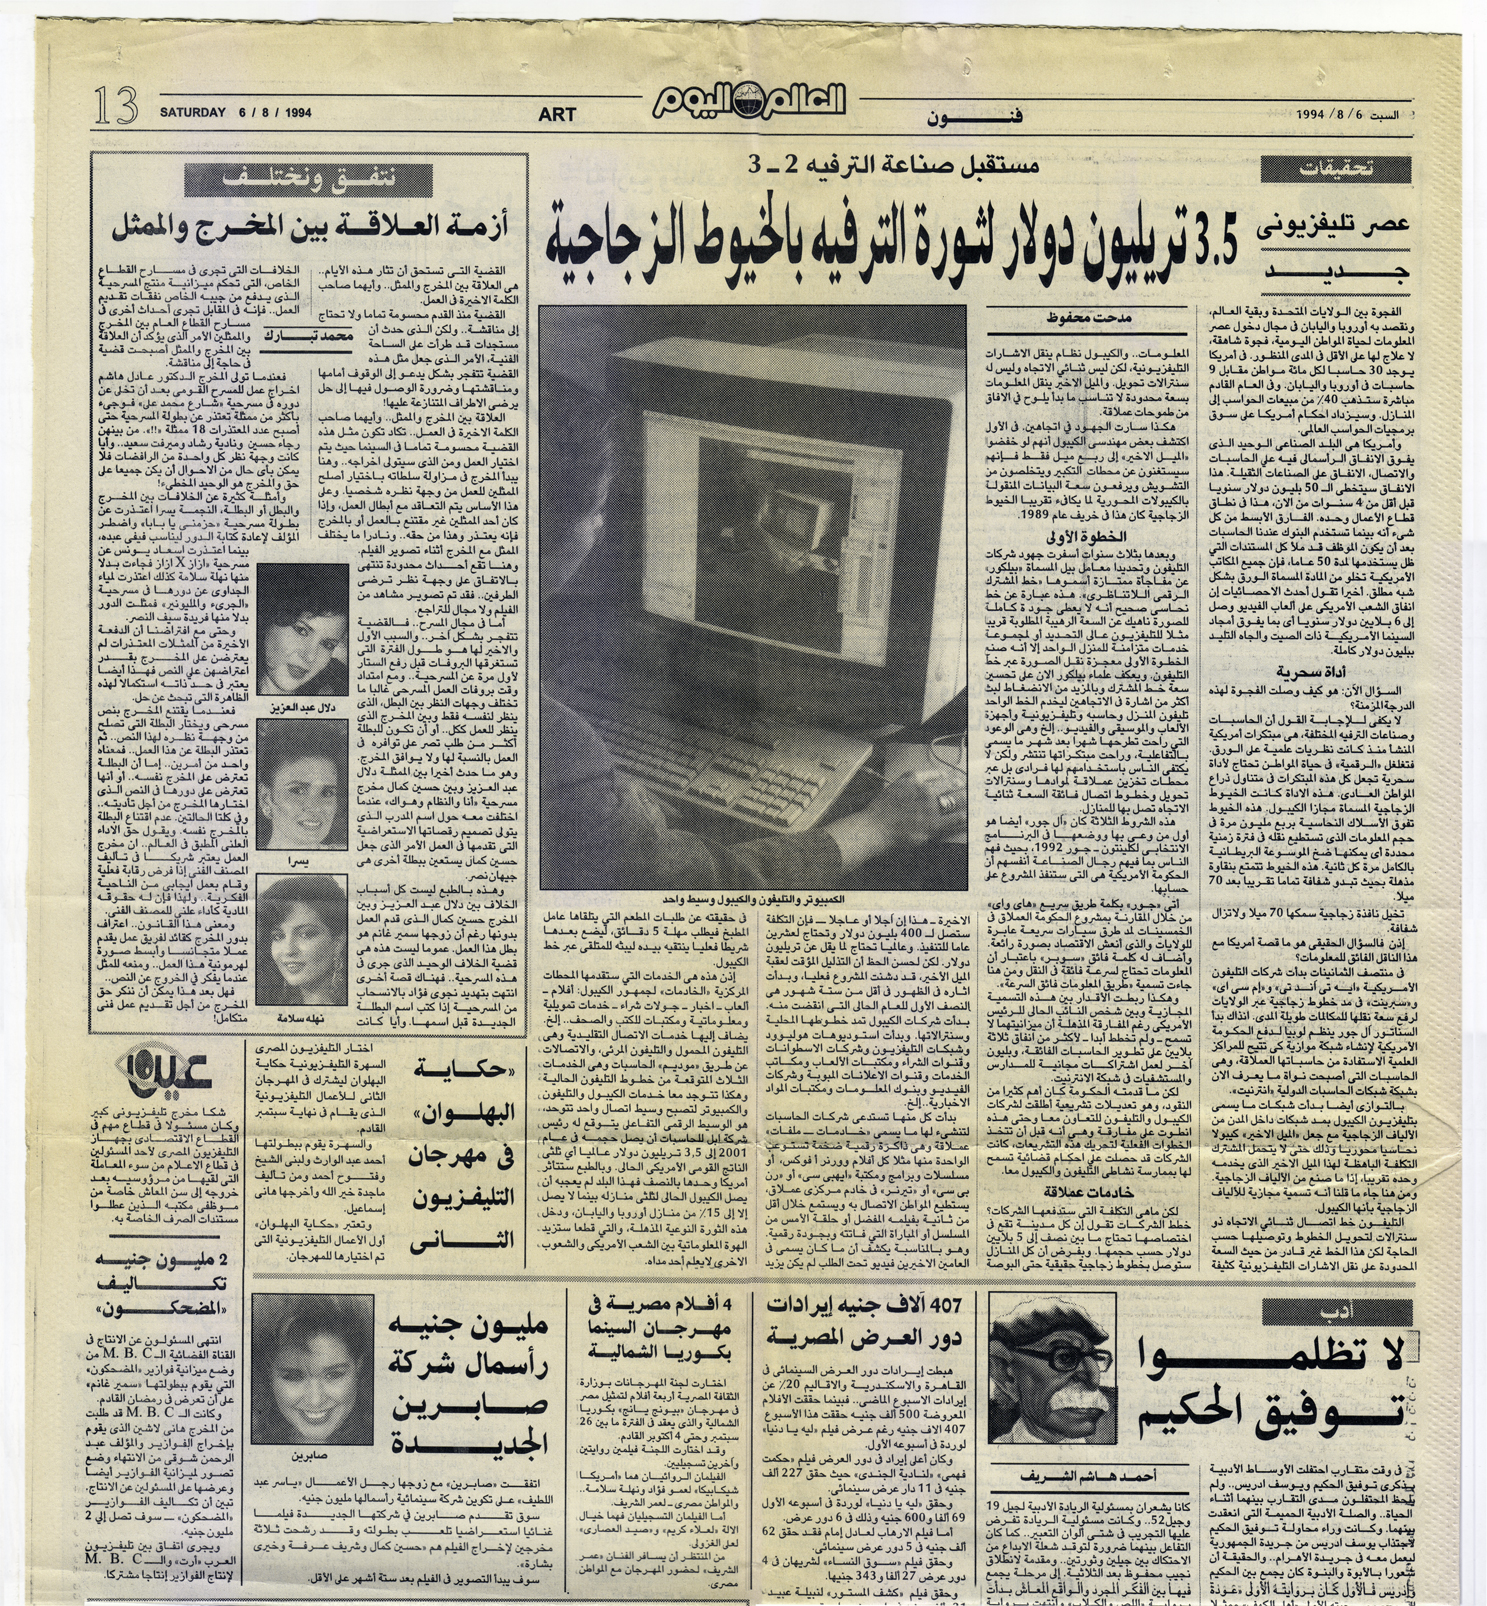 Medhat Mahfouz, AlAlam Al-Yum feature, August 6, 1994.